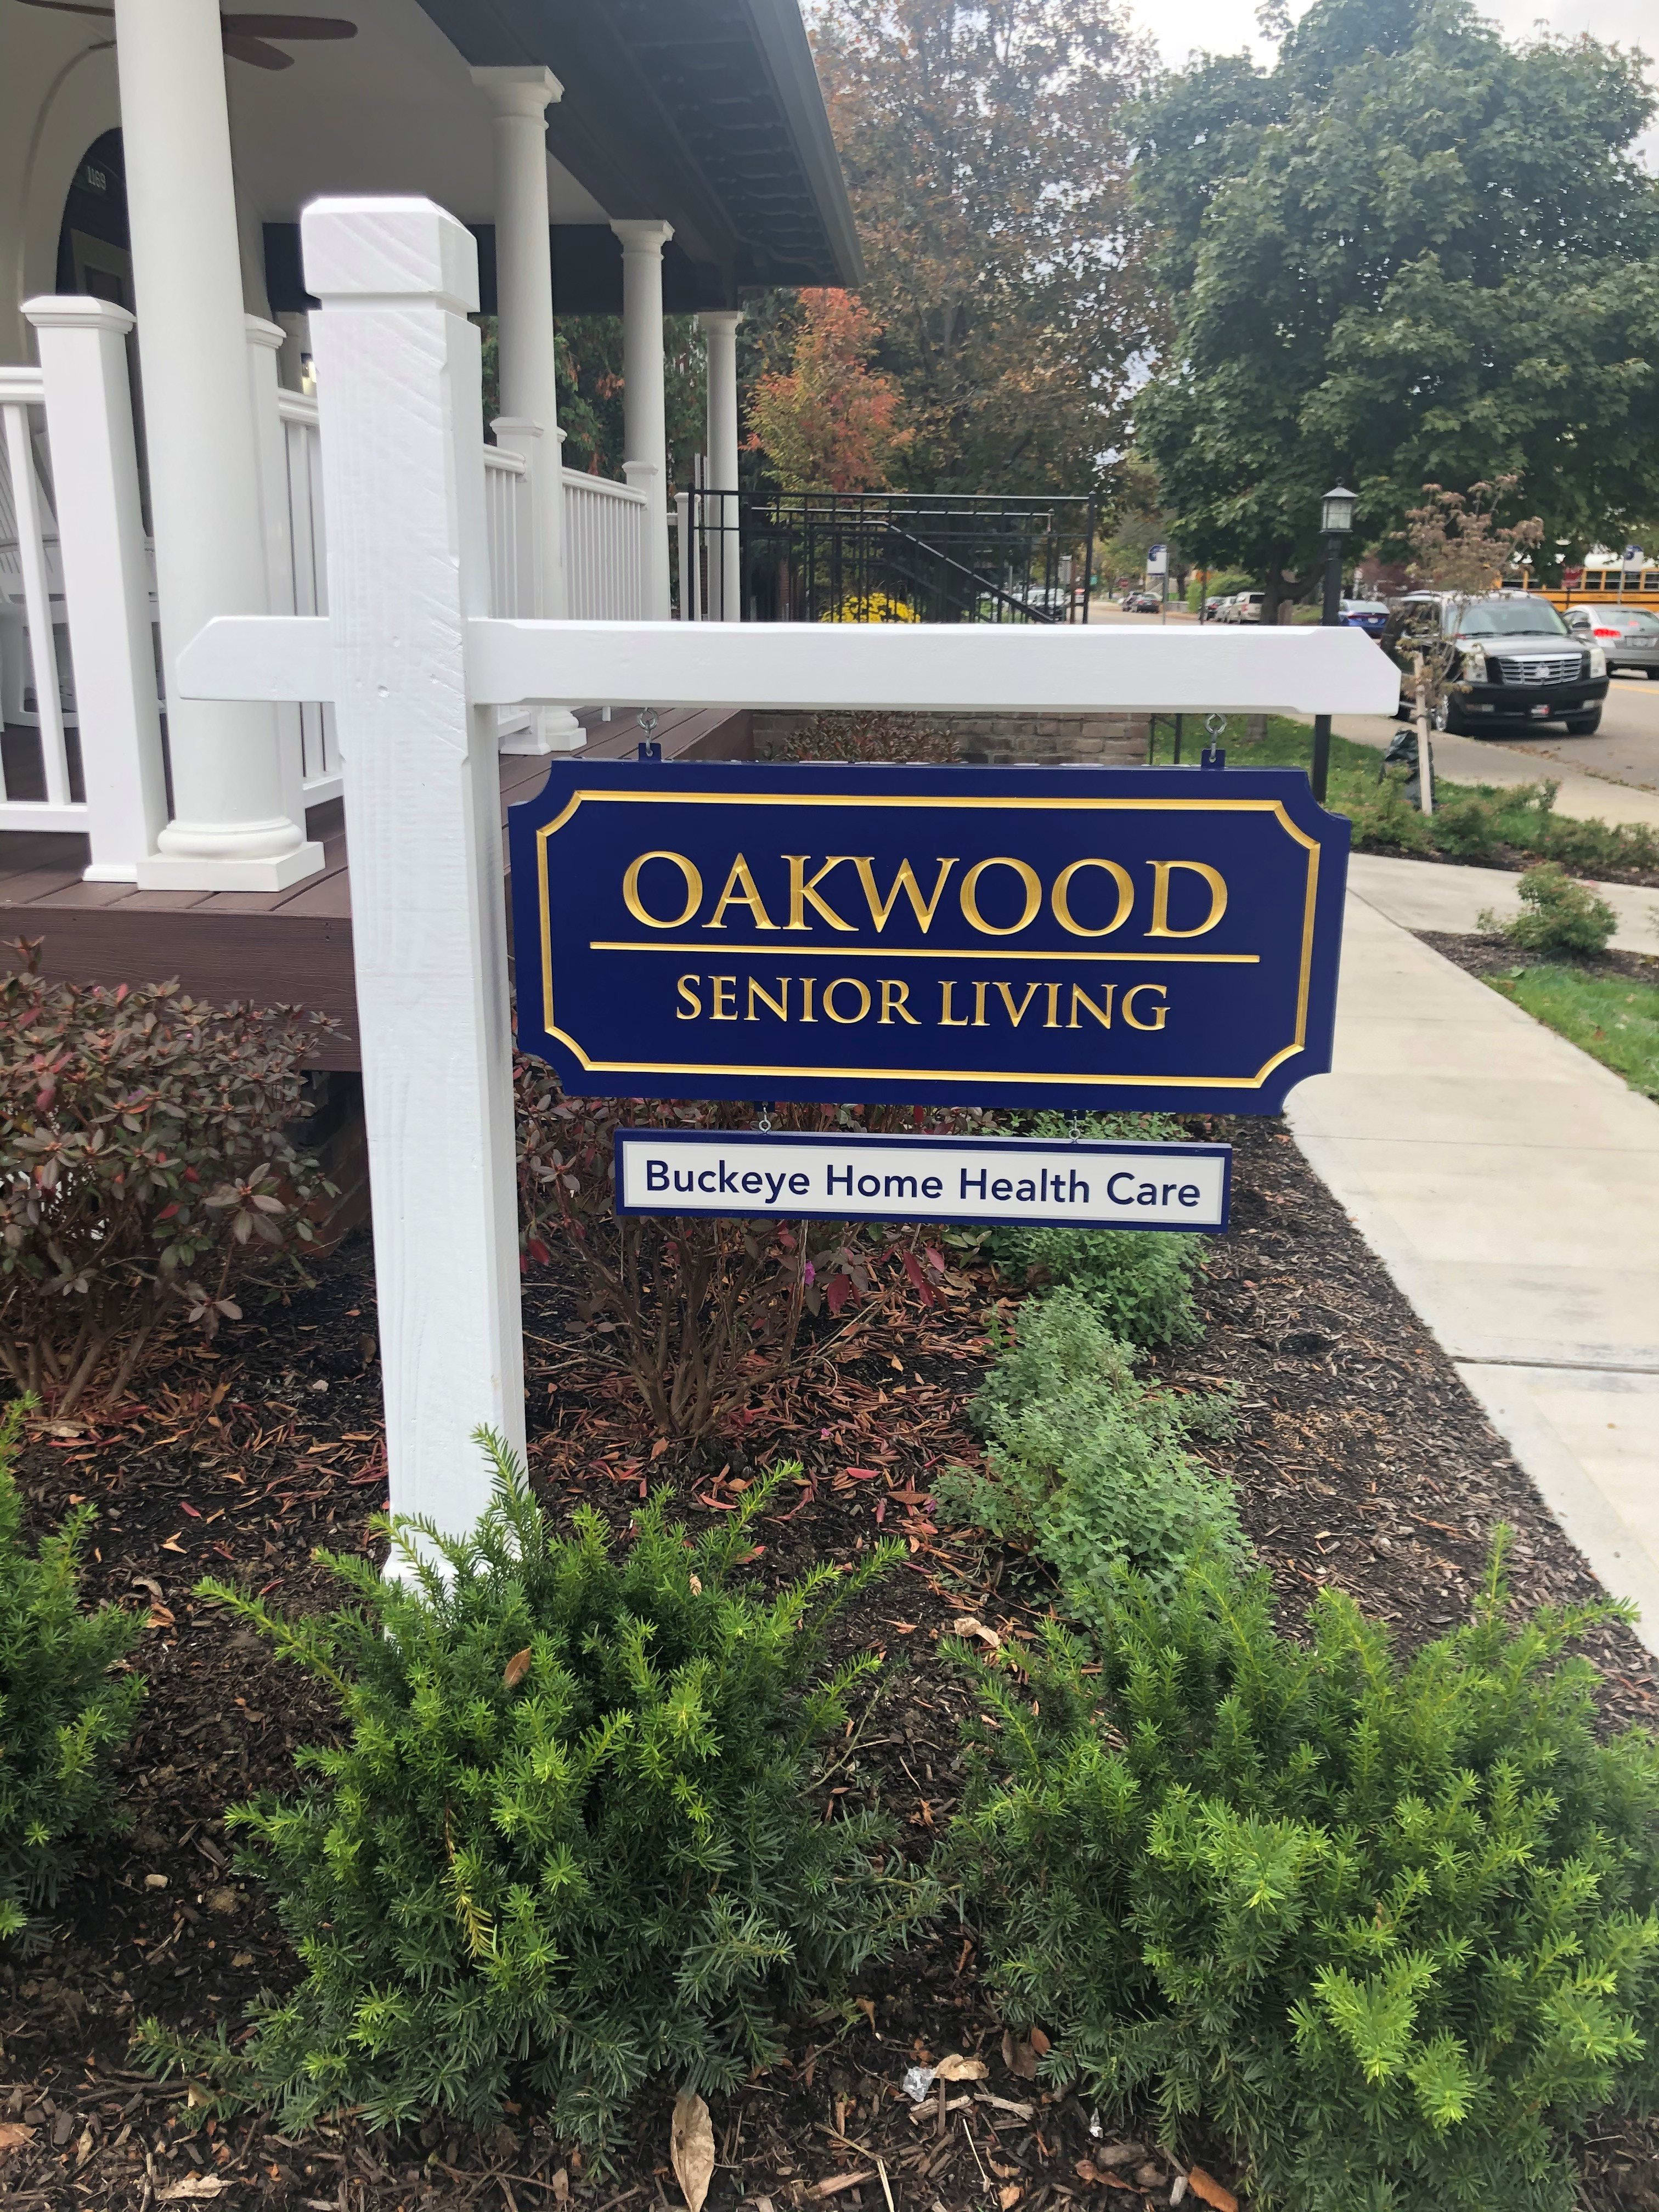 Oakwood outdoor common area